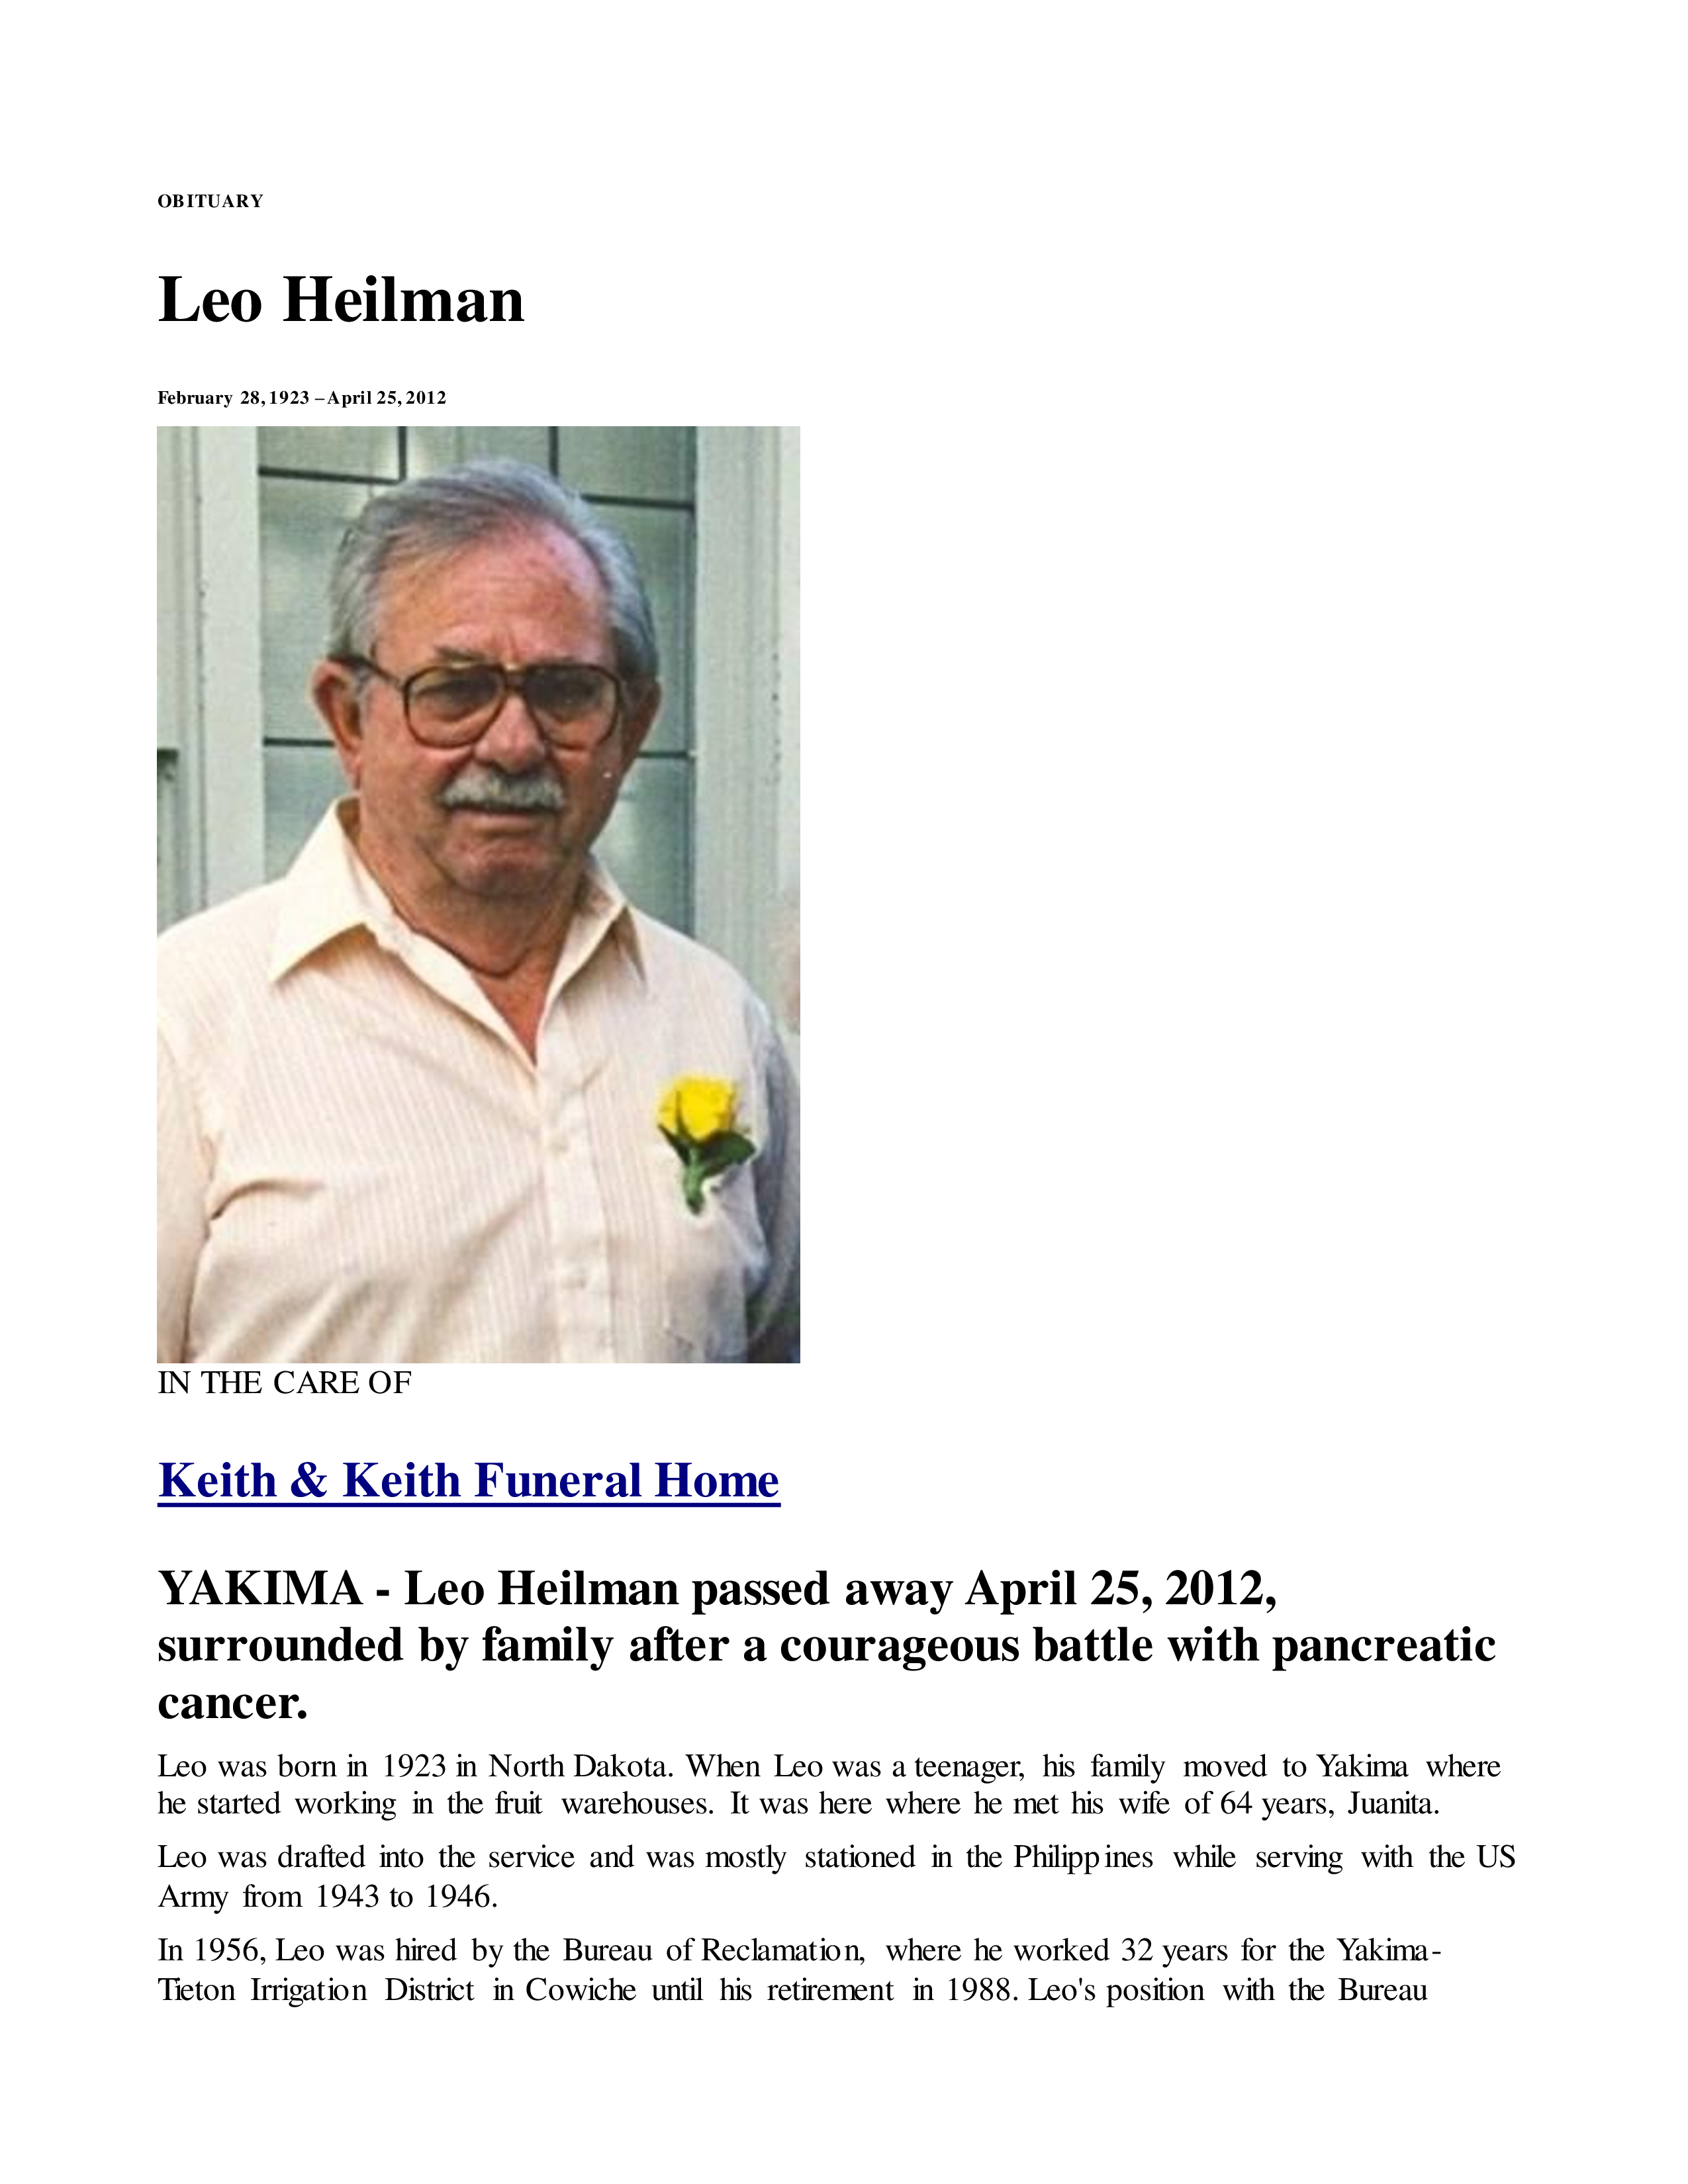 Leo Heilman, son of Jacob Heilman, obituary